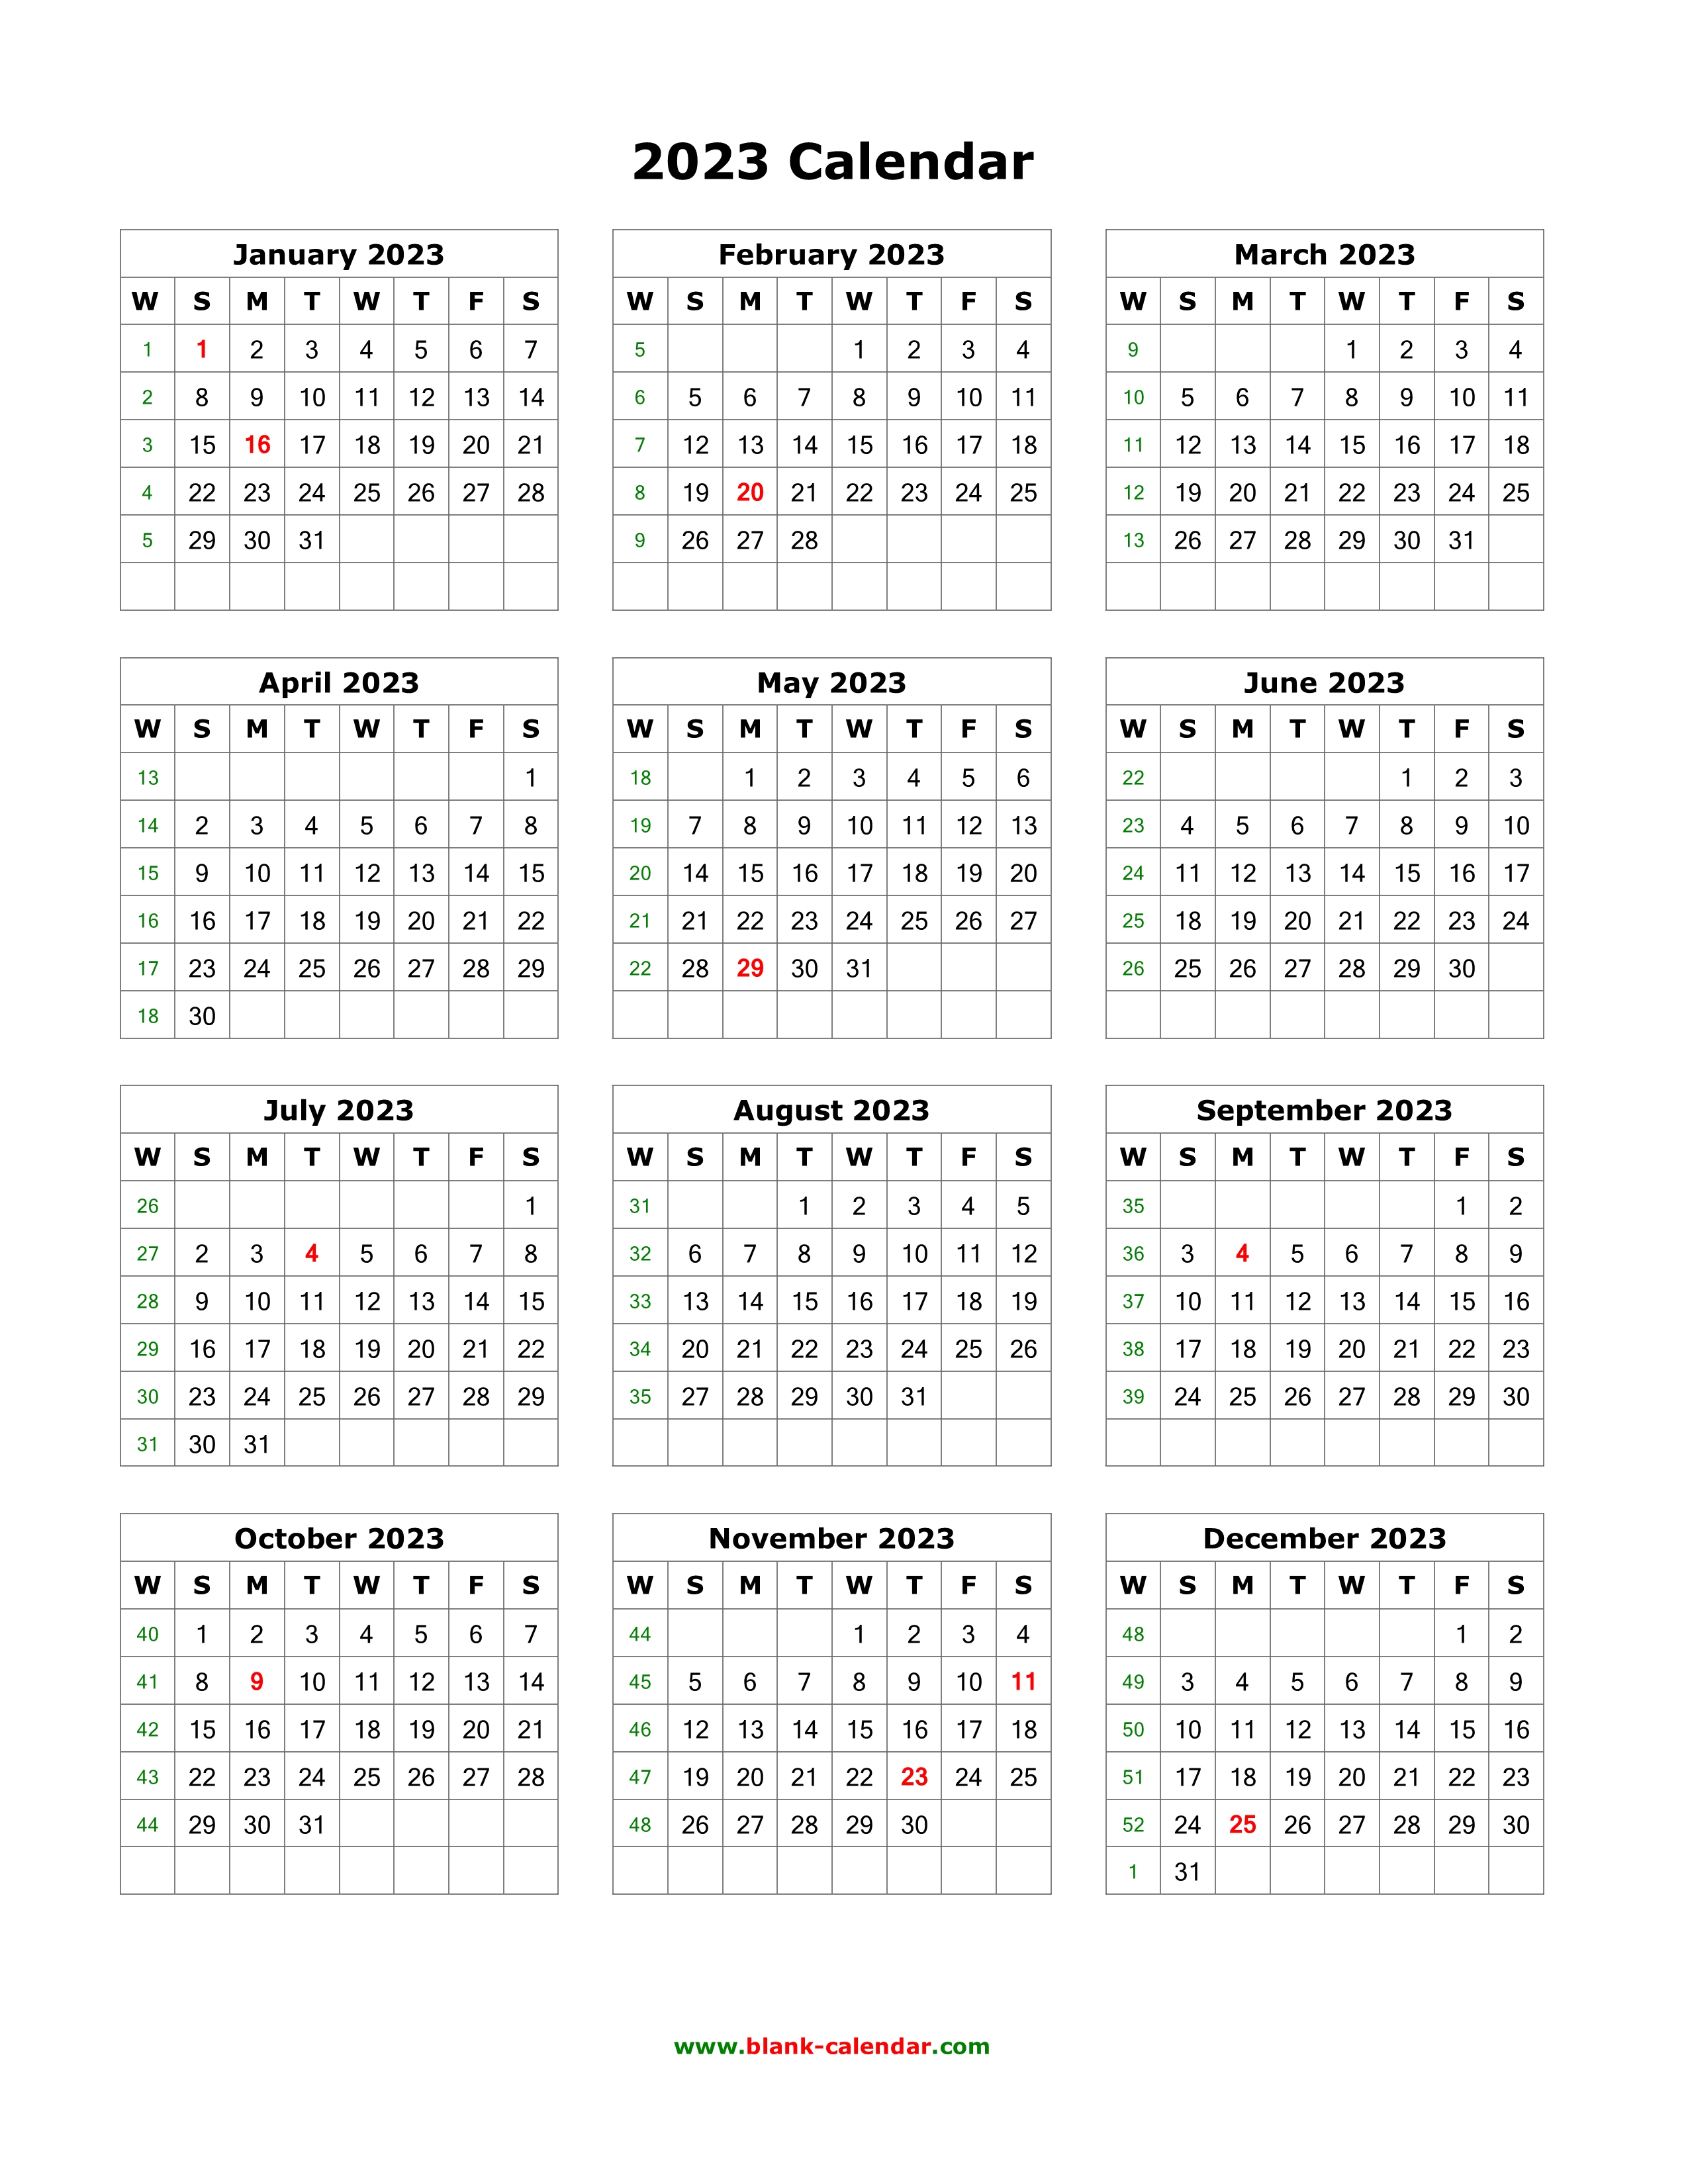 2023-one-page-calendar-printable-pdf-get-calendar-2023-update